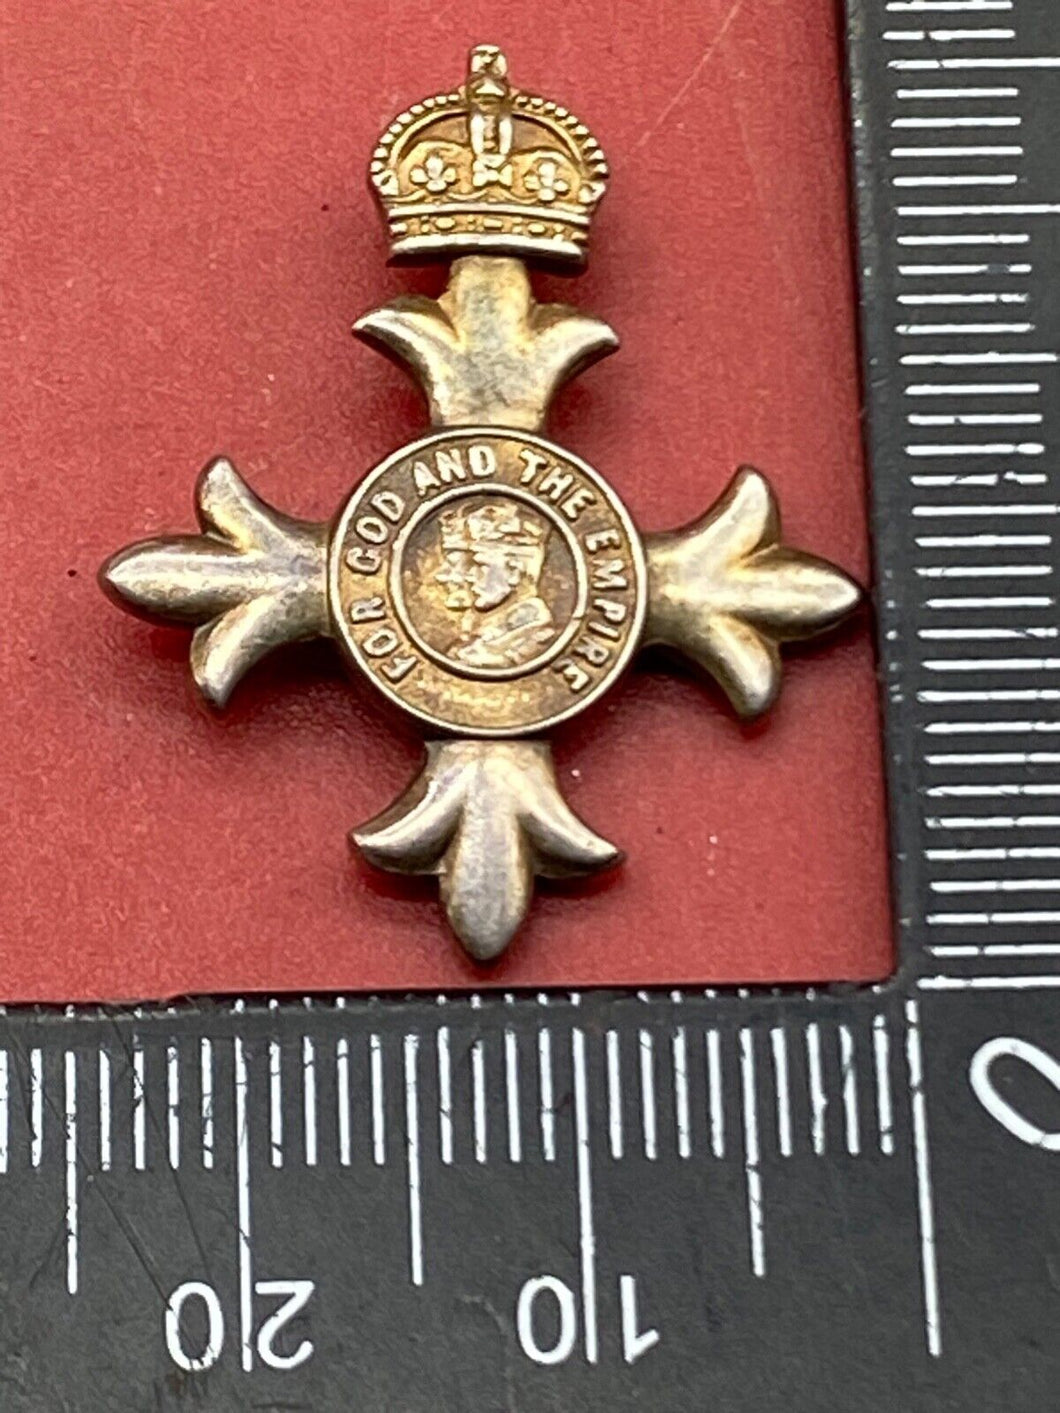 Original British Military Issue MBE Medal - Dress Uniform Miniature.